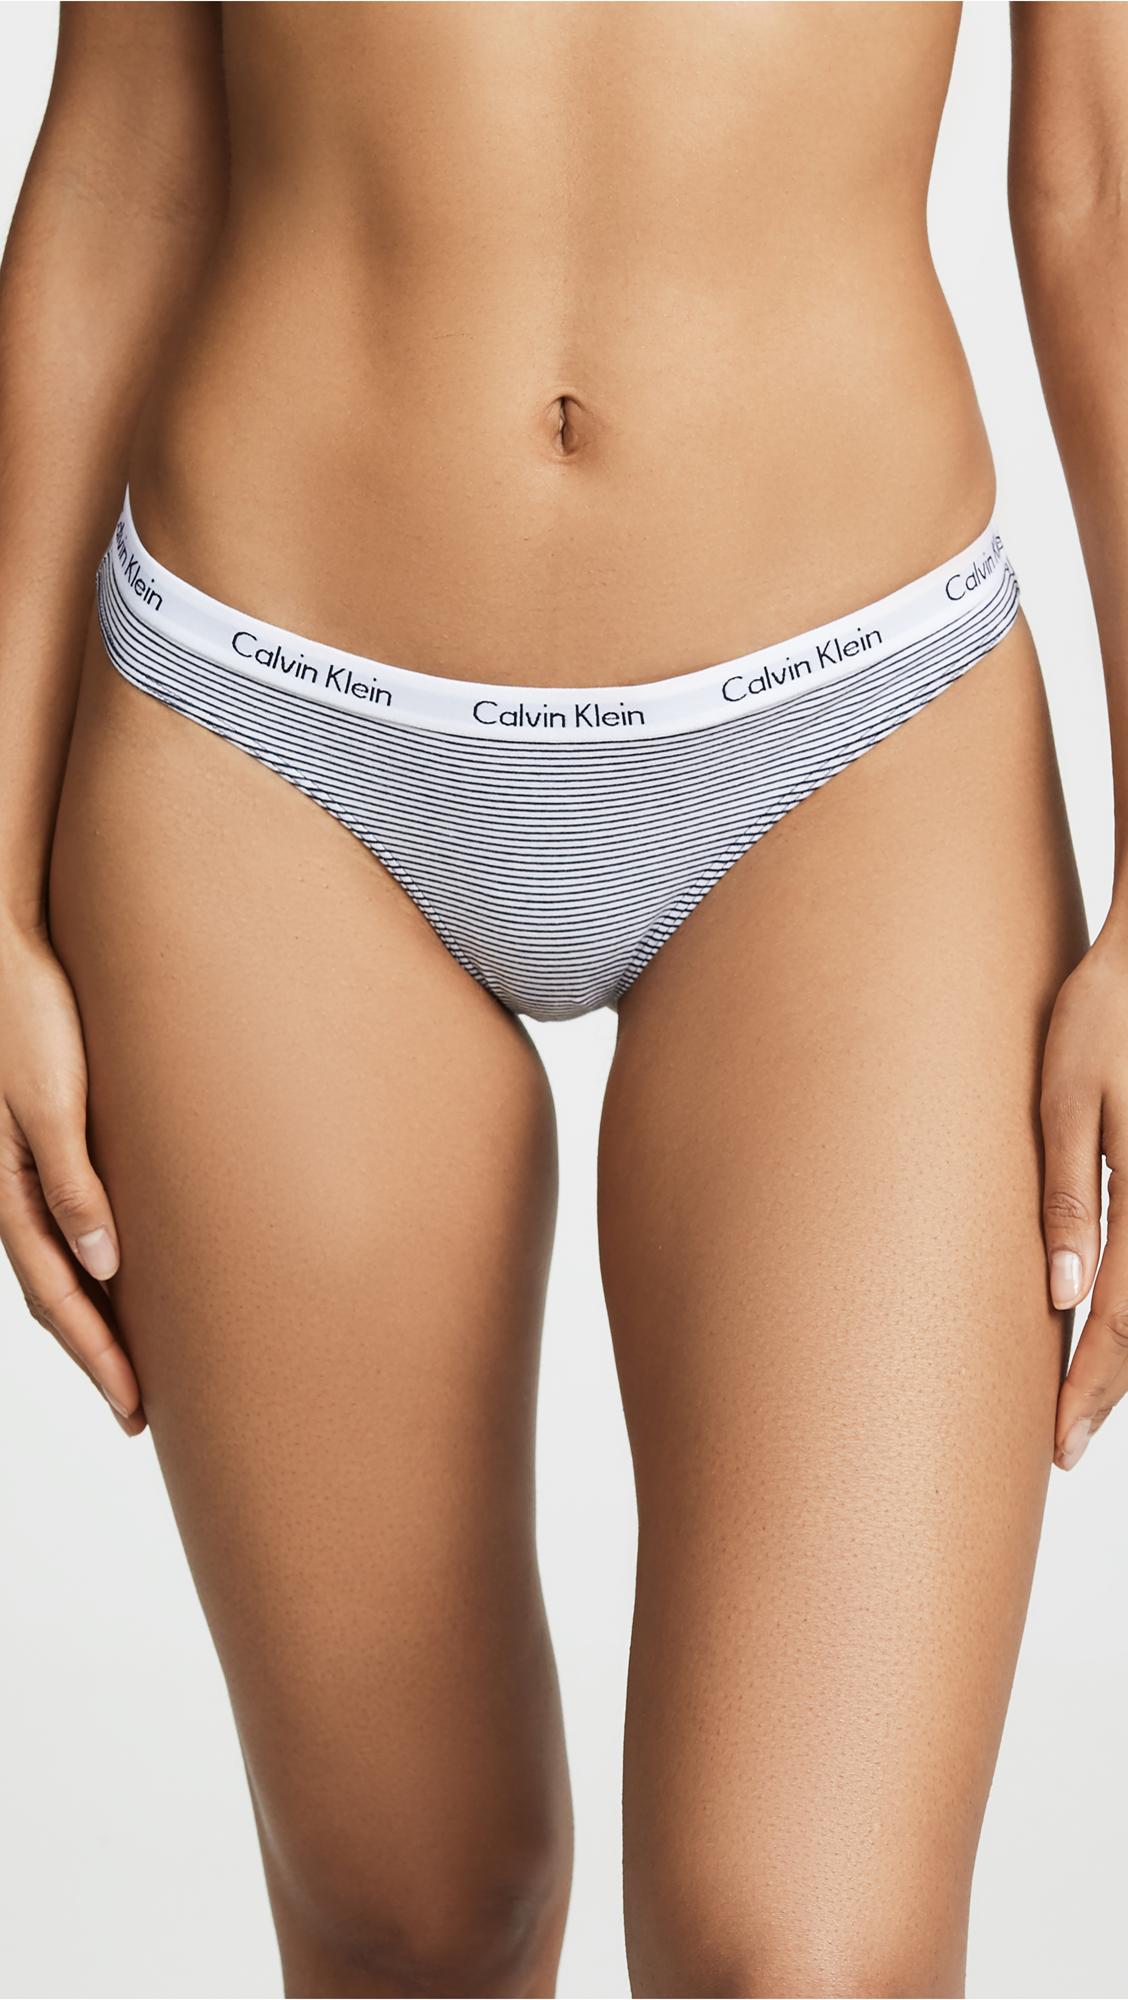 Calvin Klein Carousel 3 Pack Thongs in White